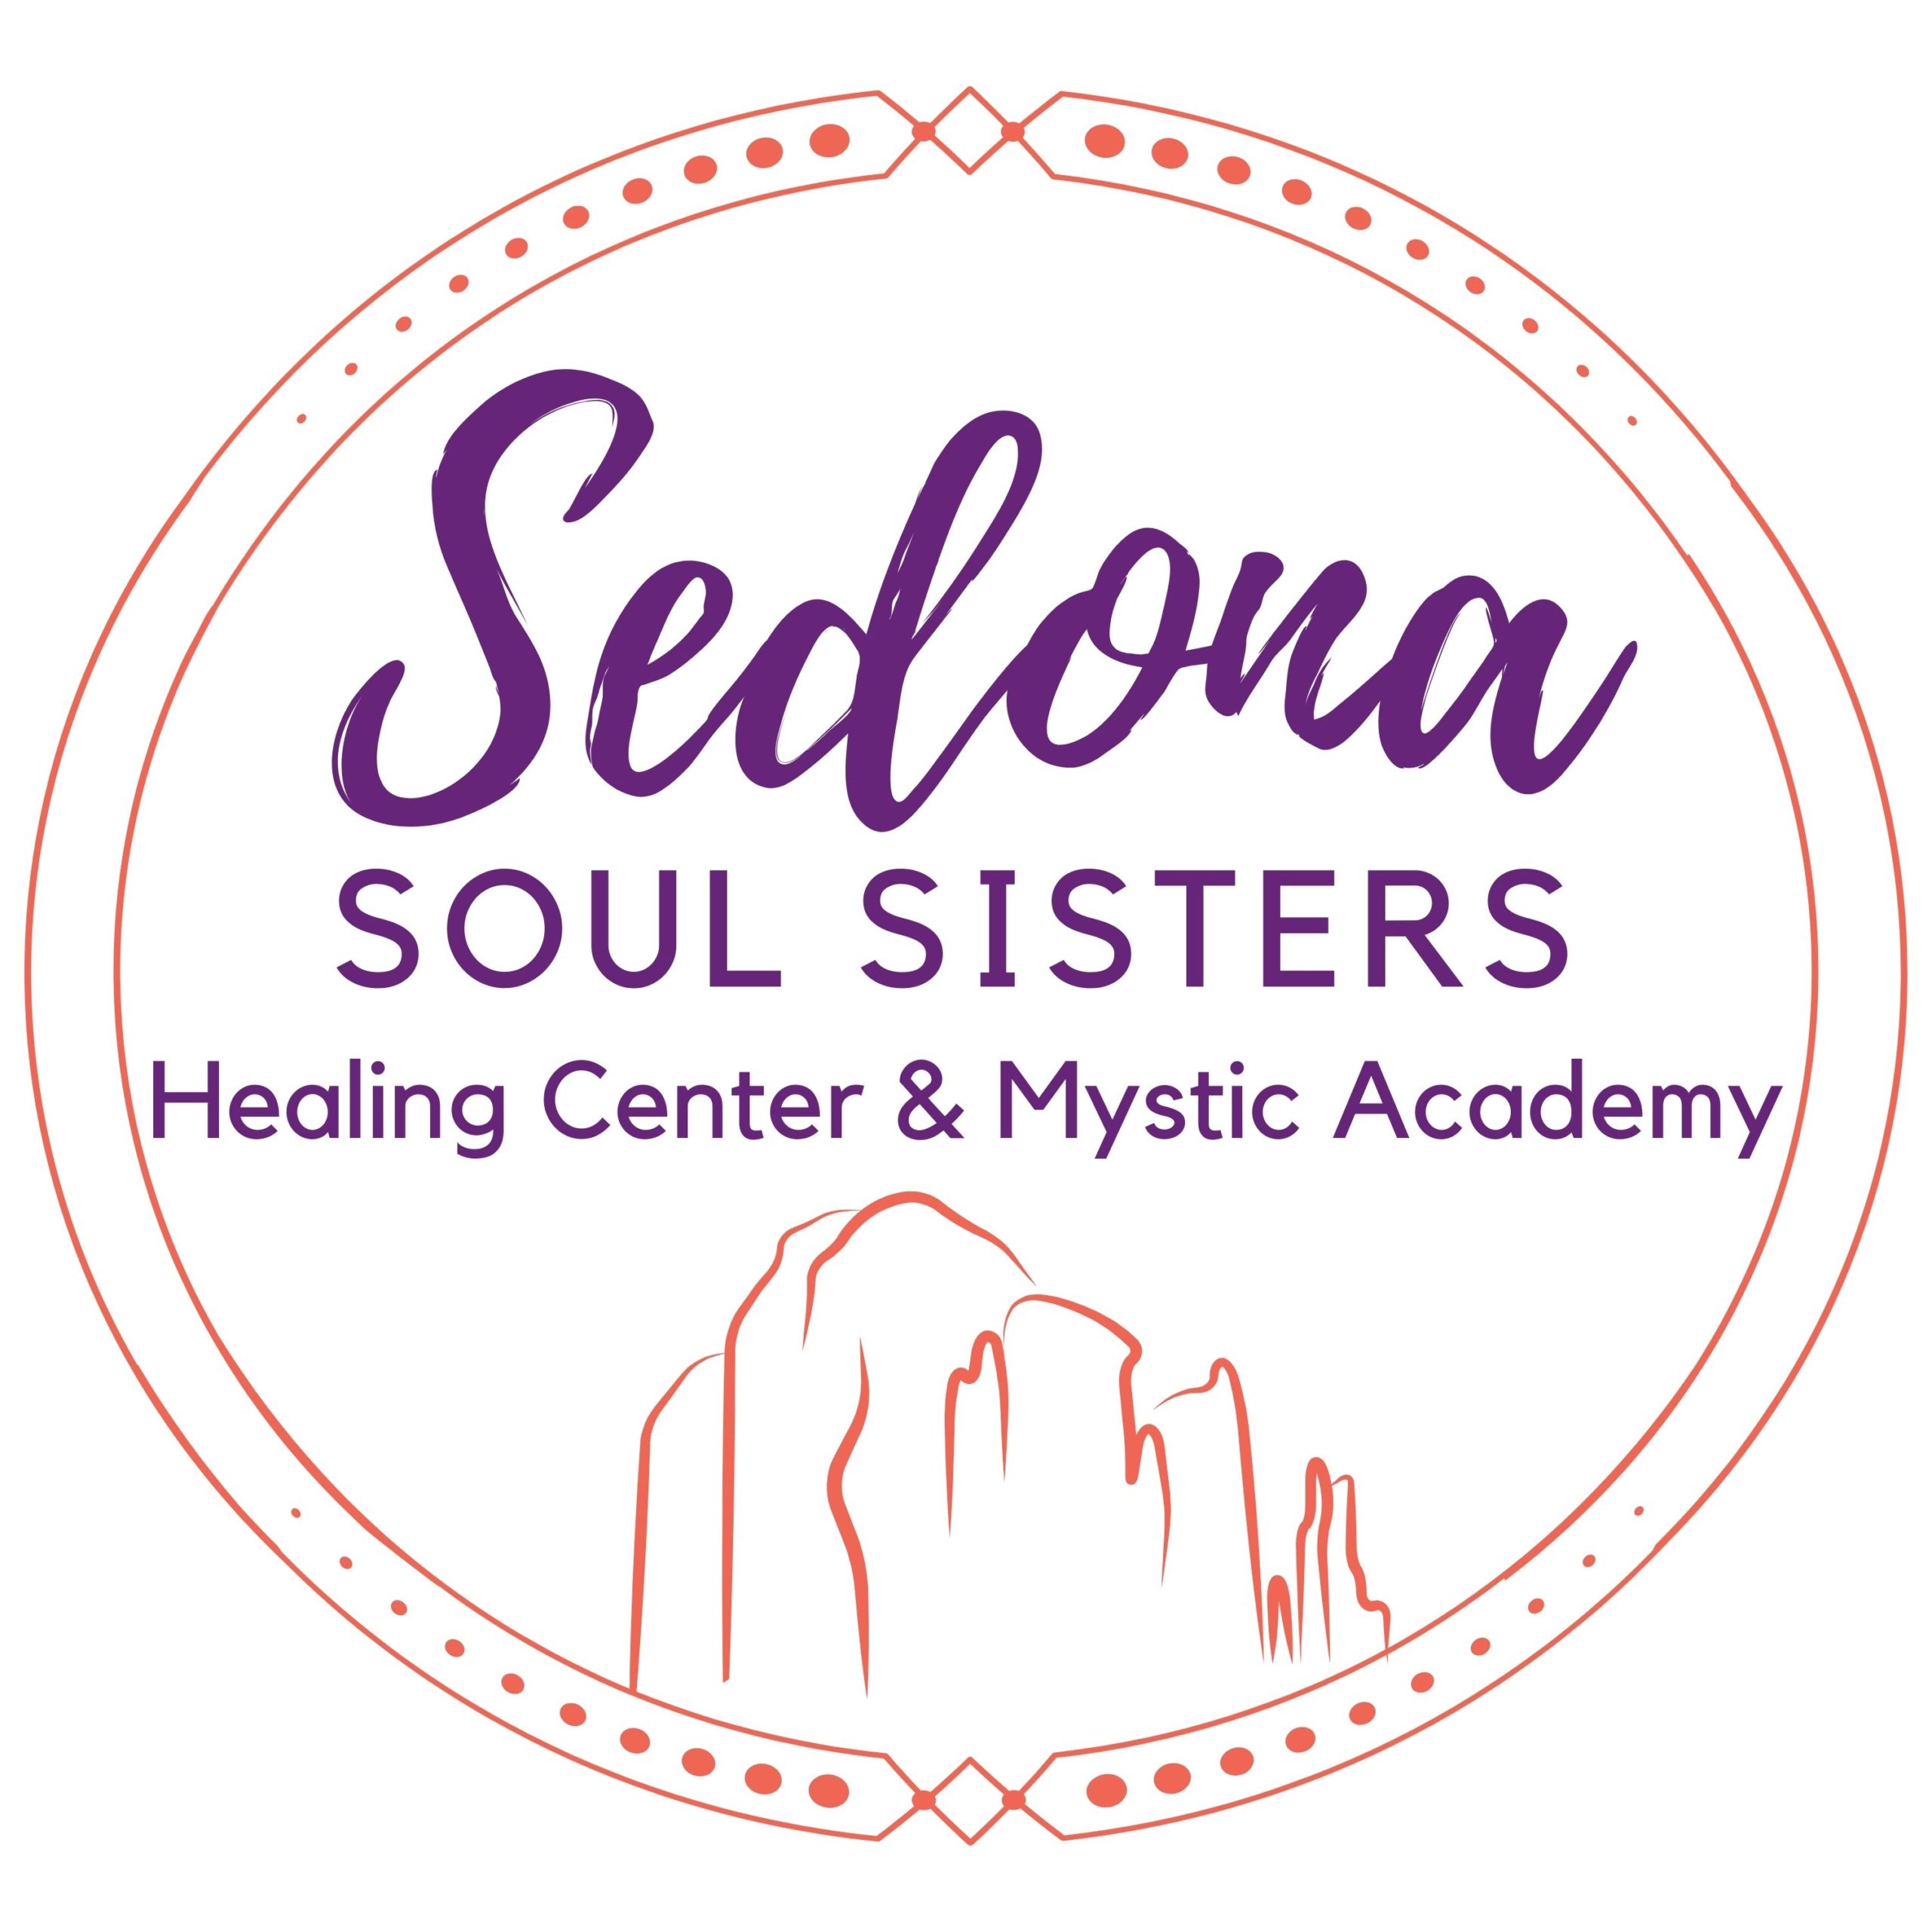 Sedona Soul Sisters